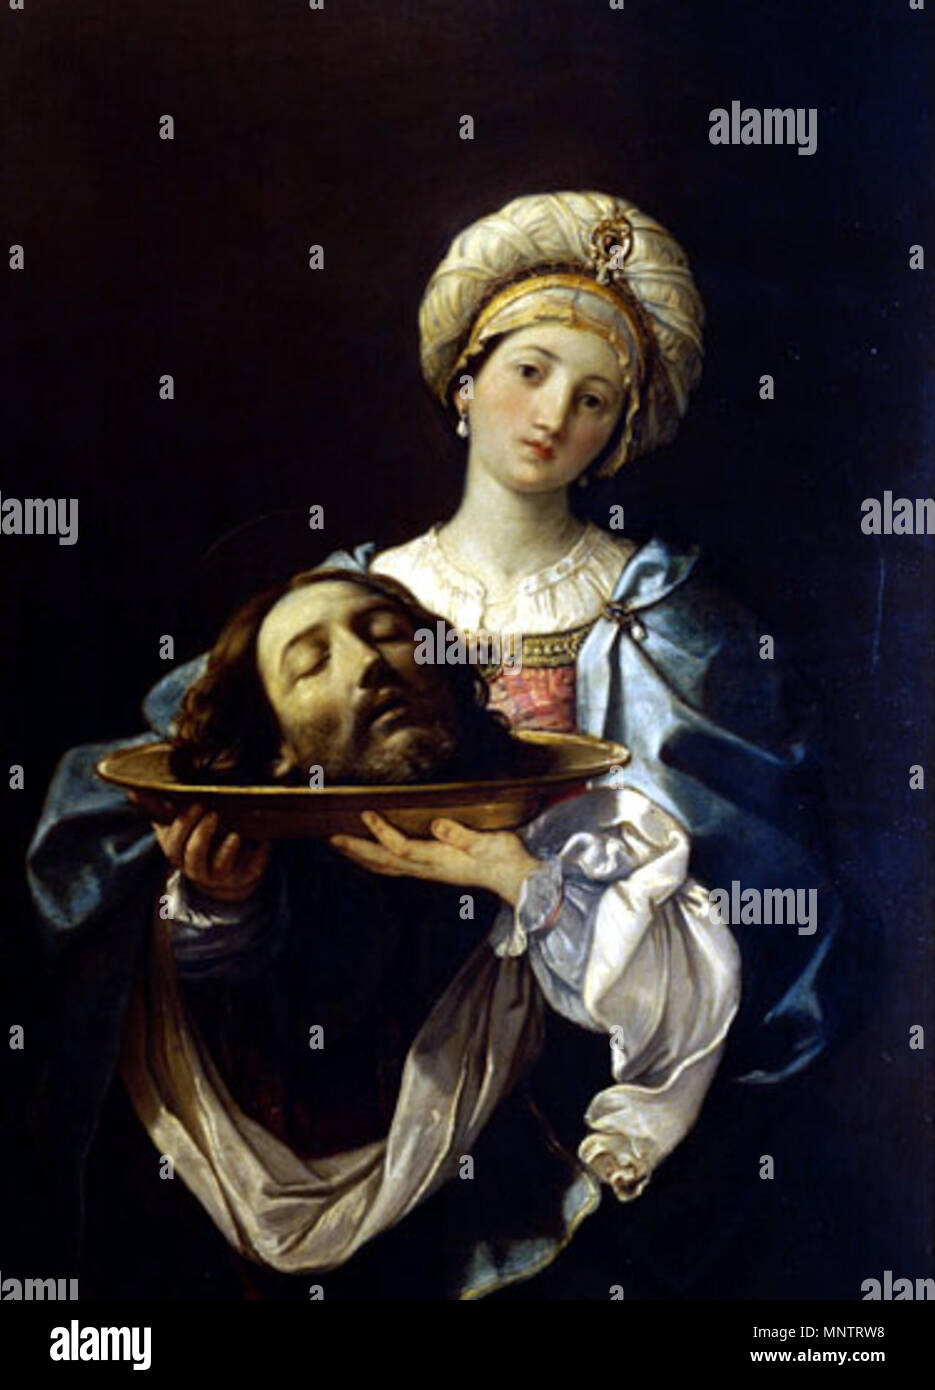 Salome with the Head of John the Baptist   1630-1635.   1053 Reni, Guido - Salome with the Head of John the Baptist - 1630-1635 Stock Photo